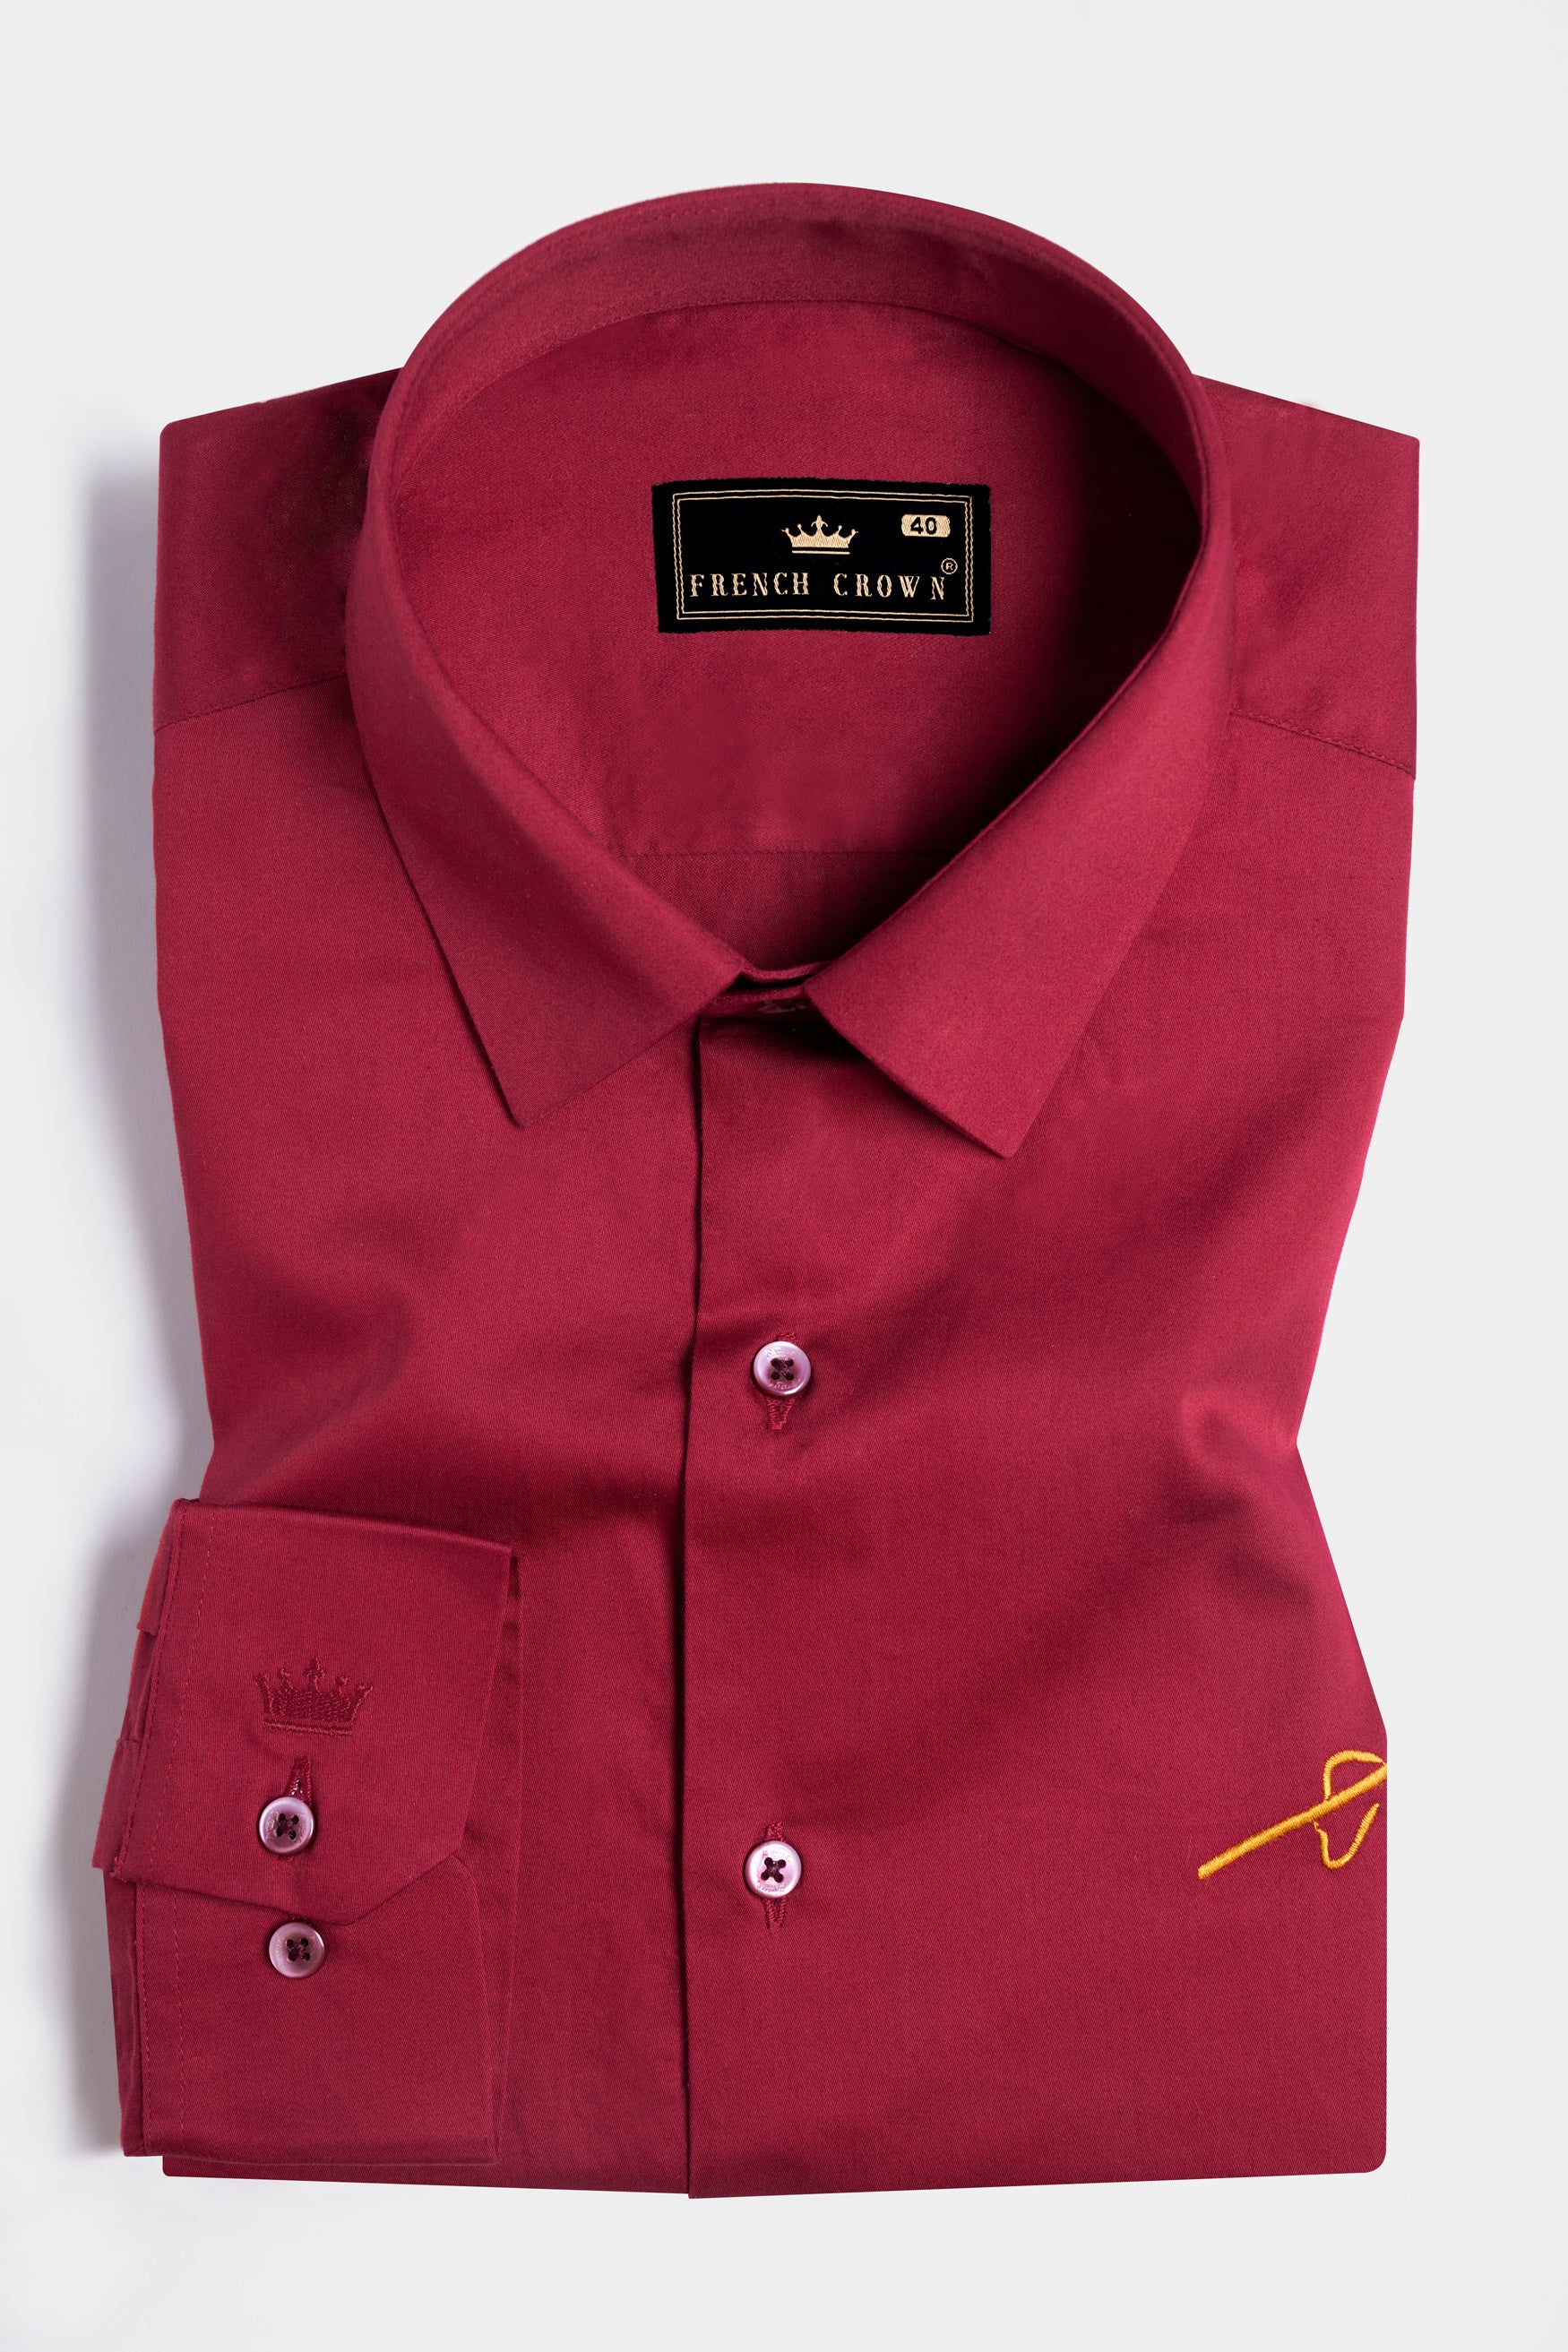 Claret Red Lord Krishna Embroidered Subtle Sheen Super Soft Premium Cotton Designer Shirt